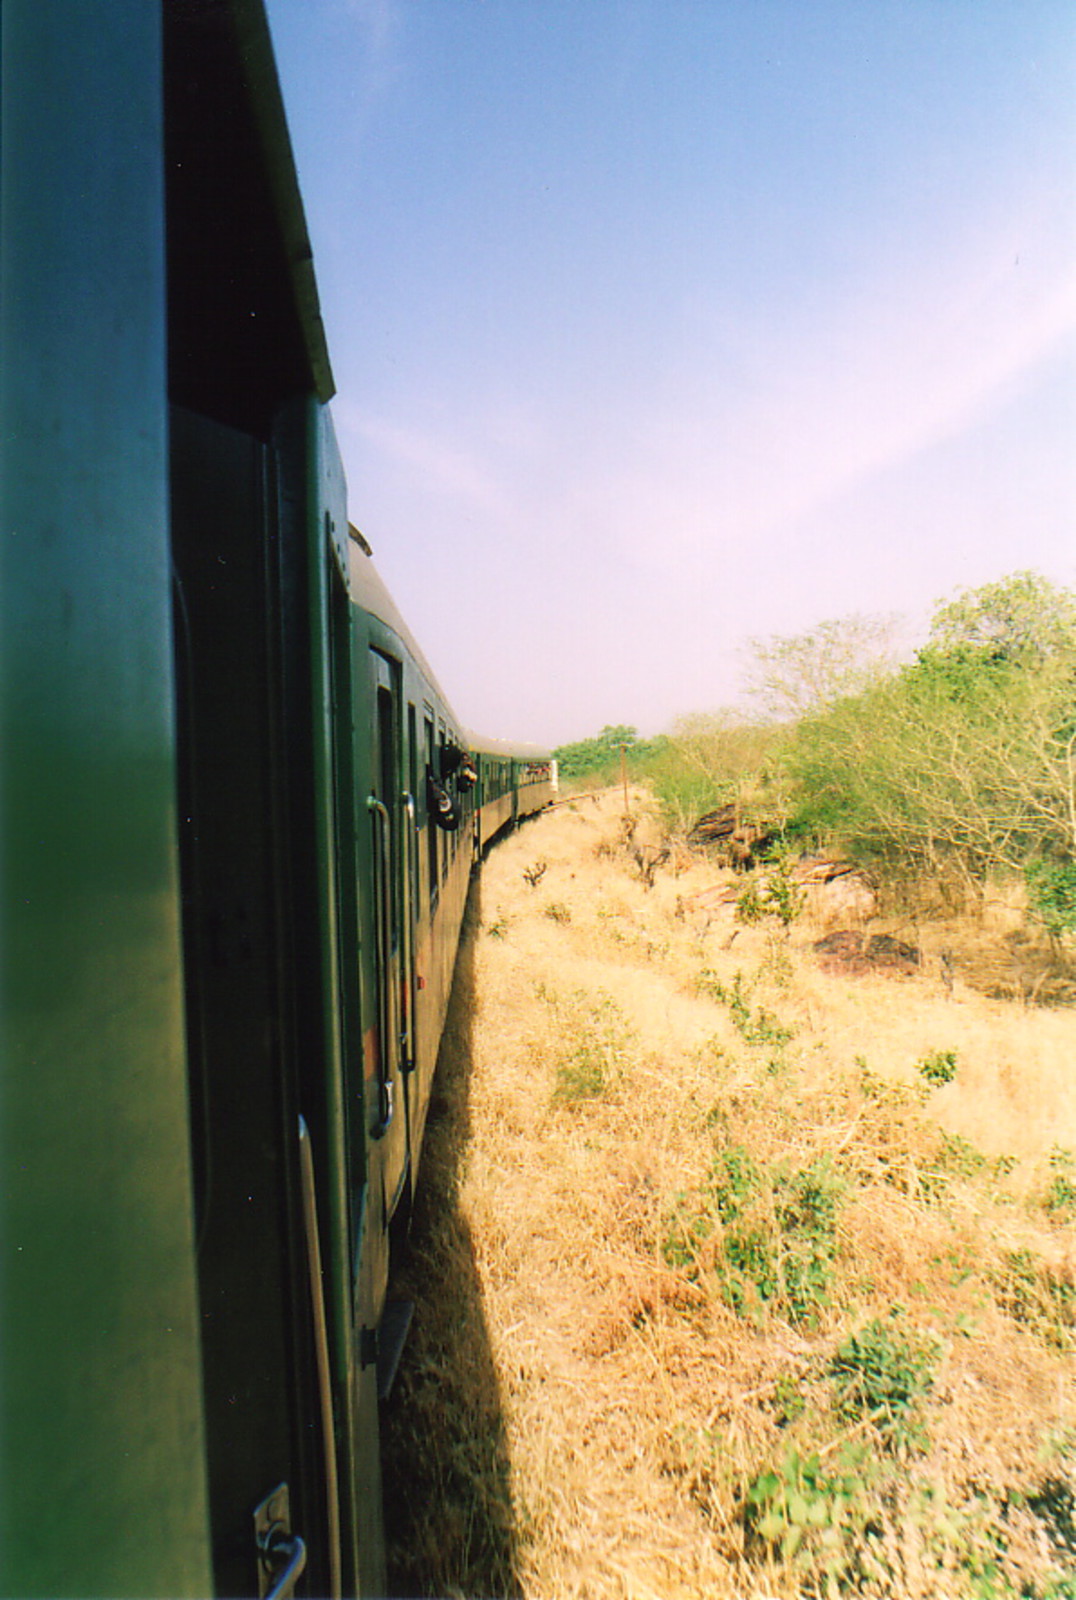 The Kayes-Bamako train